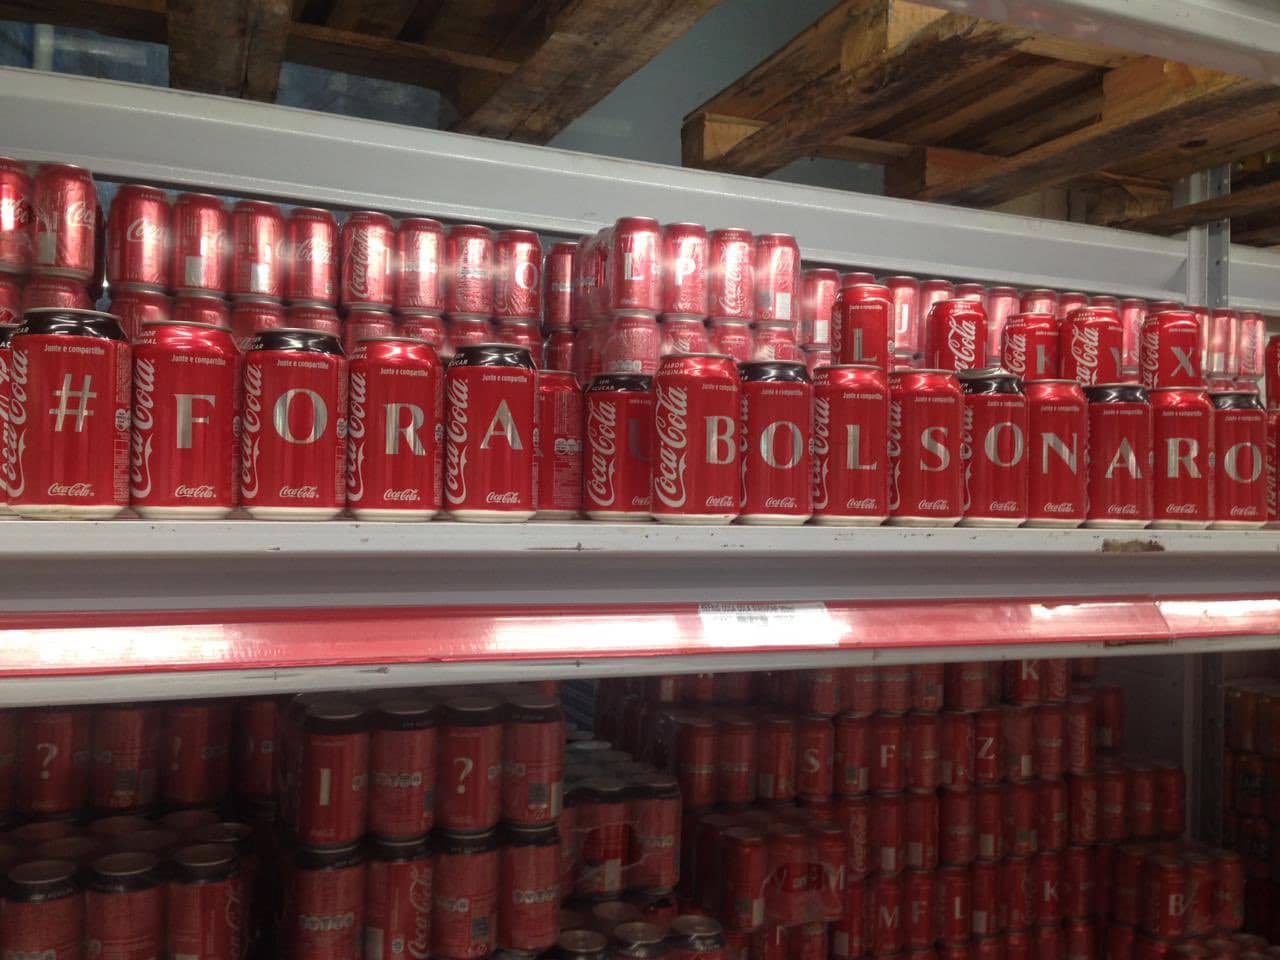 Coca-Cola #FORABOLSONARO